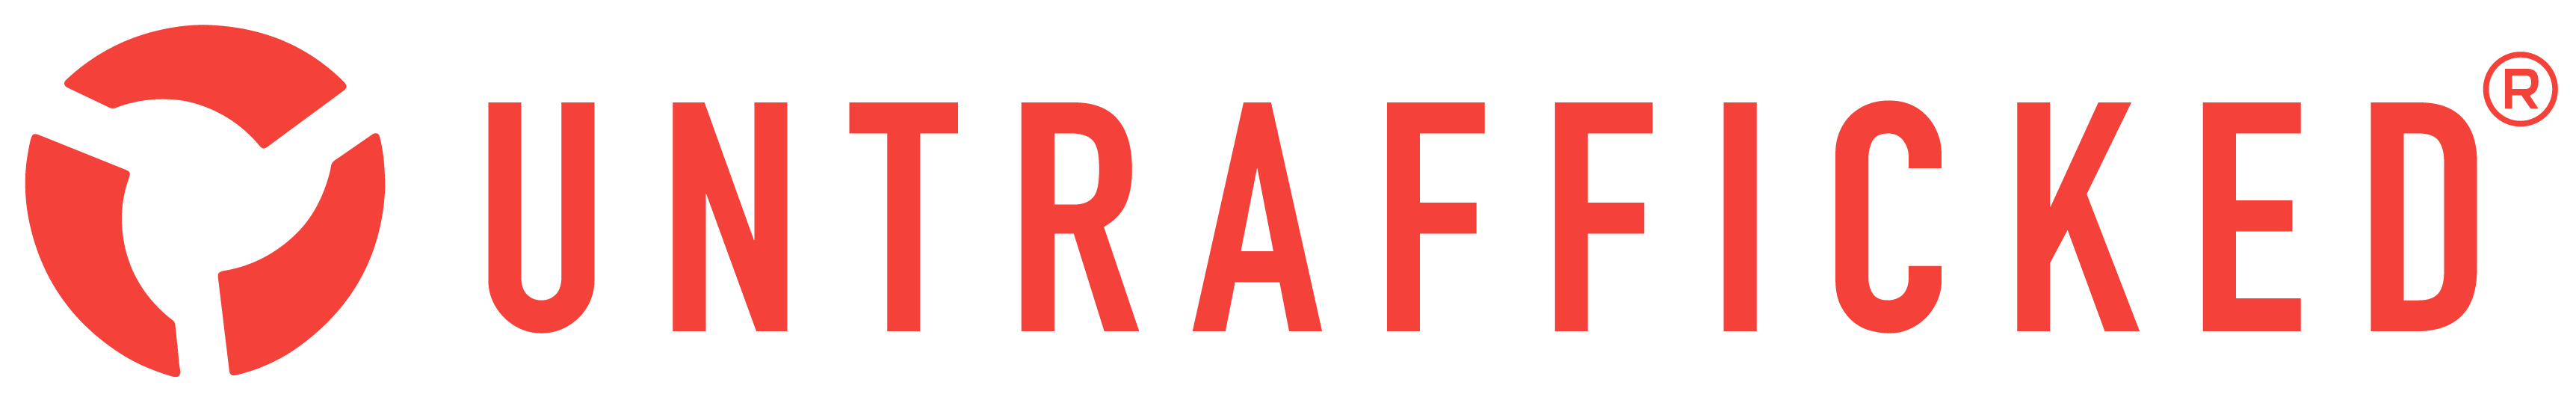 Untrafficked-logo-Hi-Res